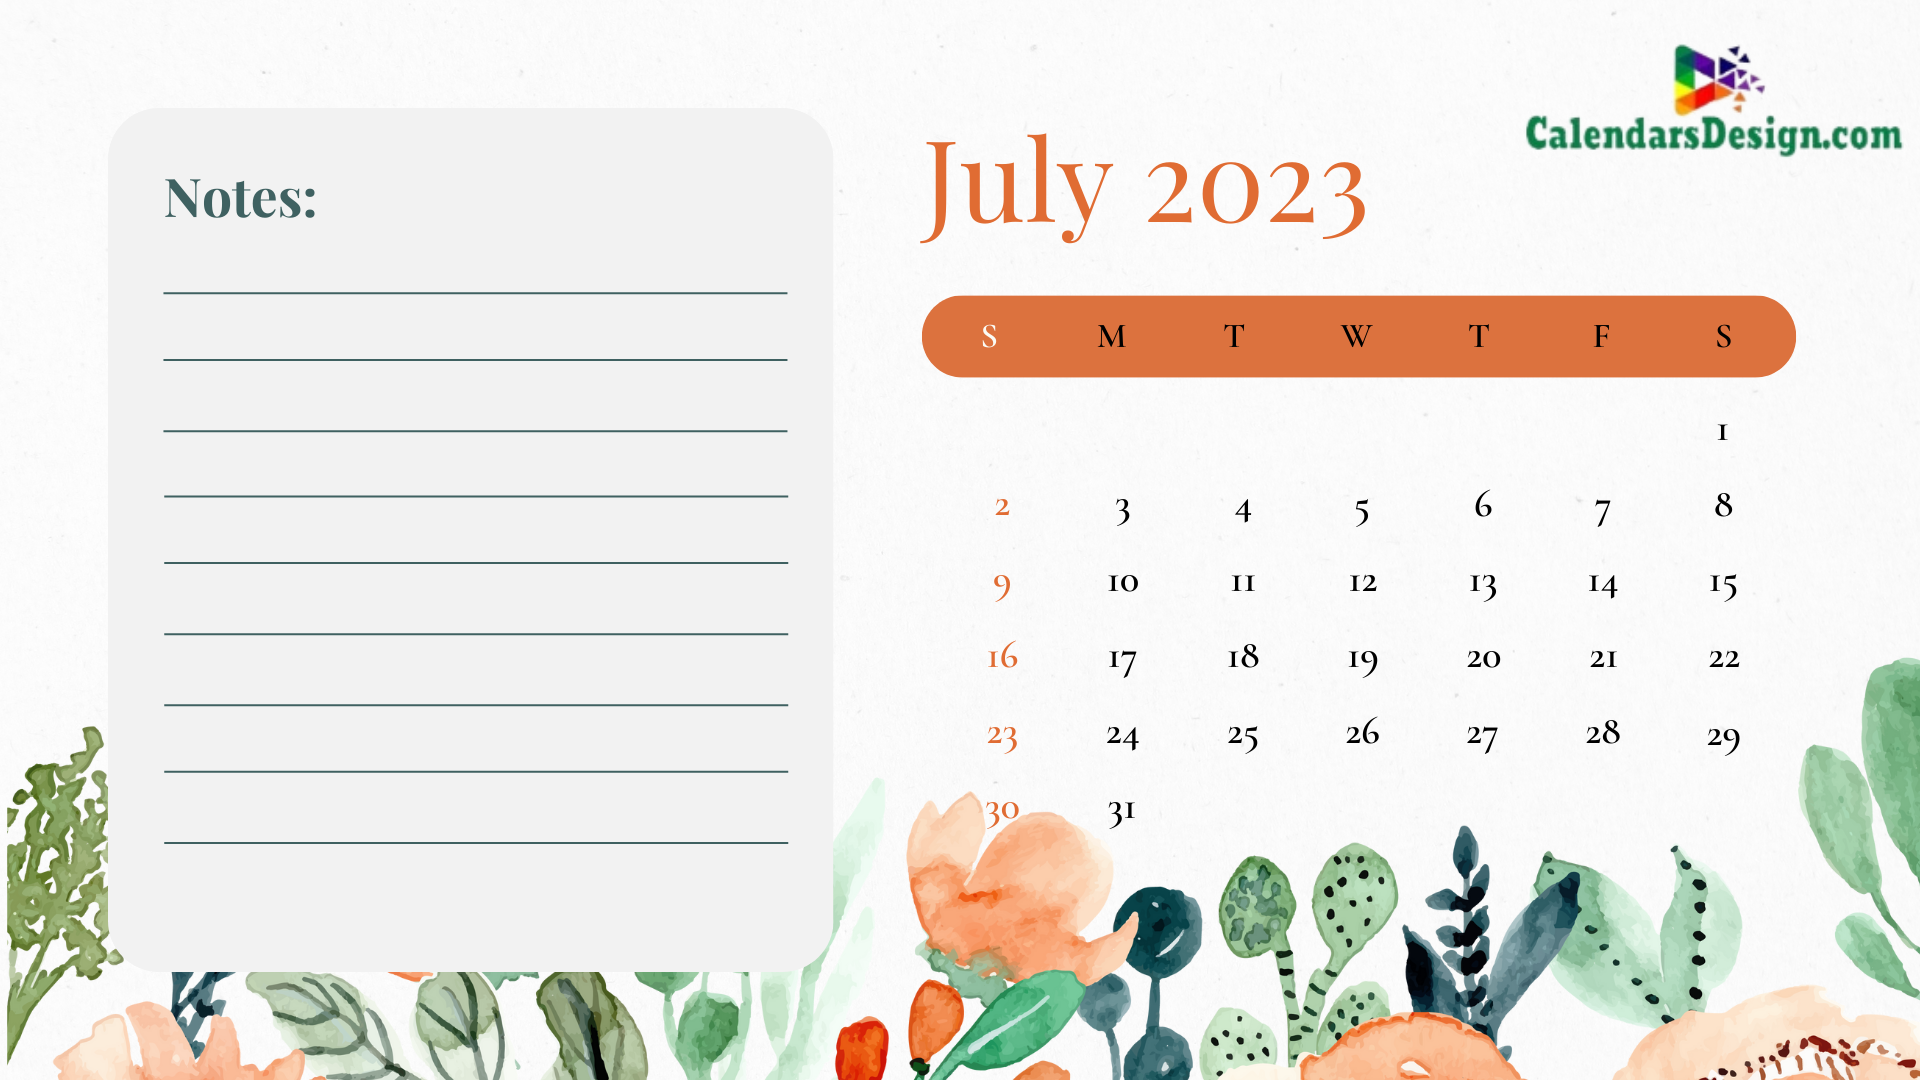 July 2023 Wall Calendar Designs